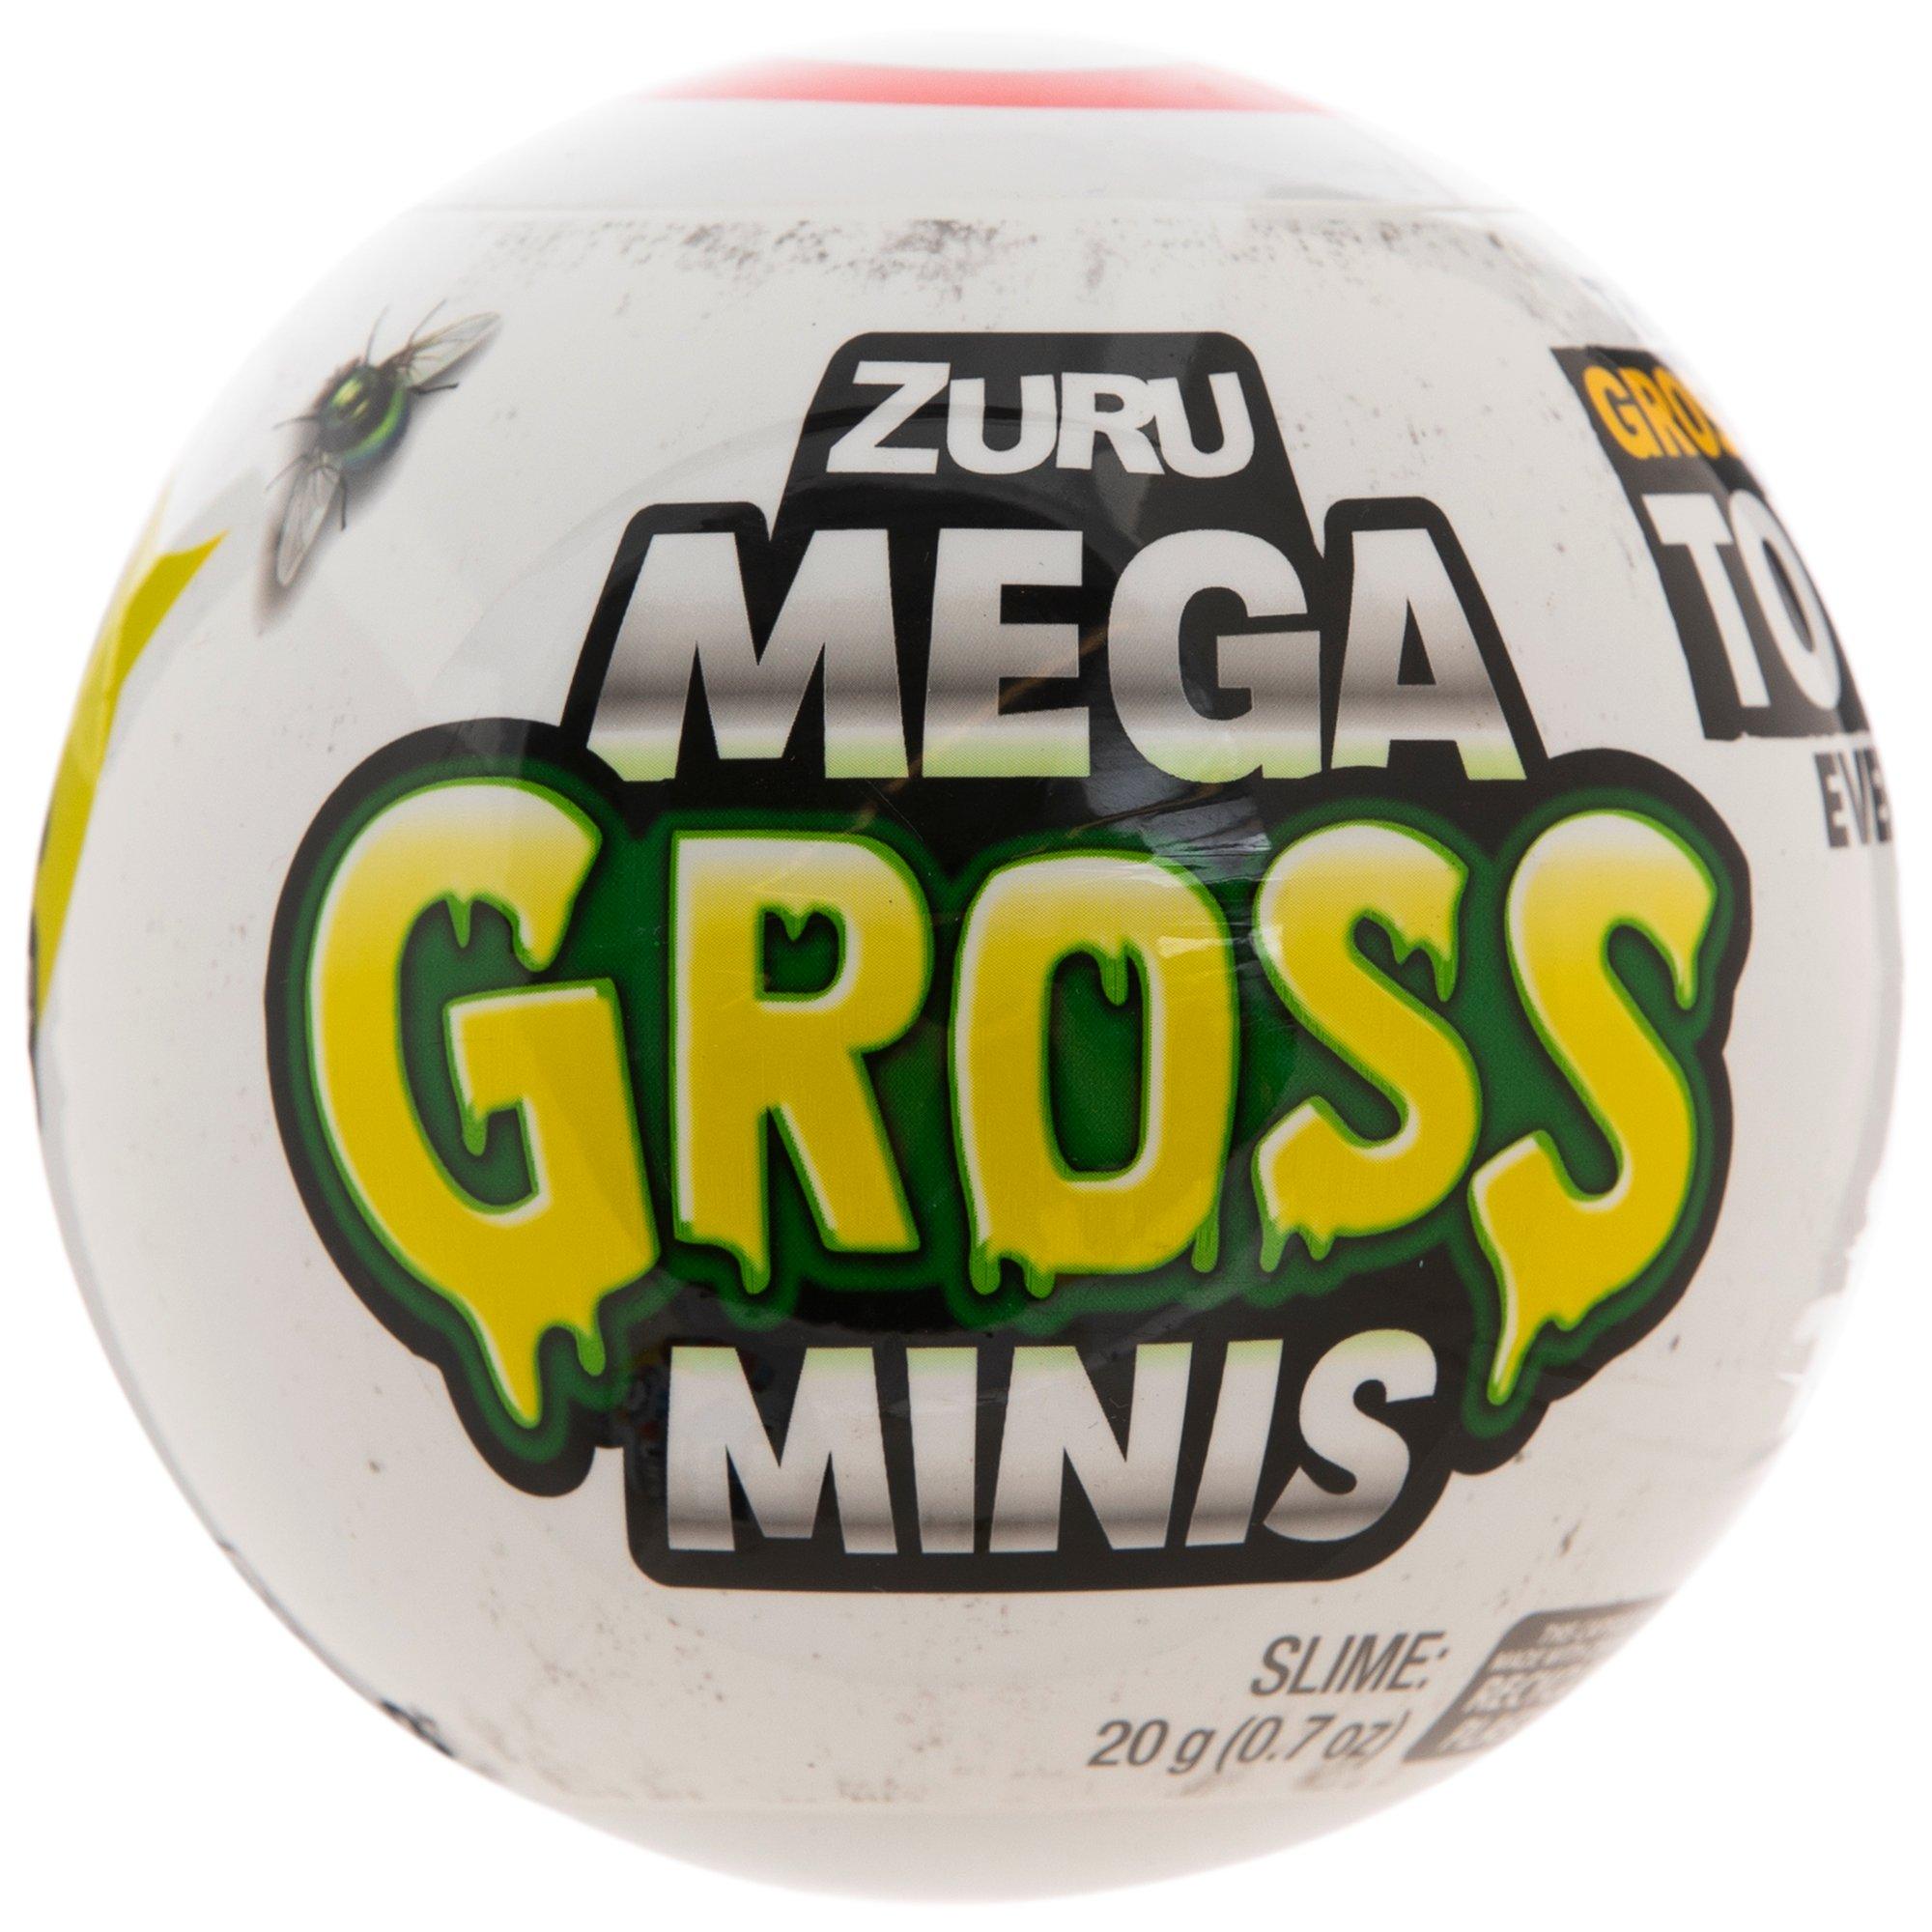 ZURU MEGA GROSS Mini brand new out MCCAVITIES POOP PASTE COMBINED POSTAGE